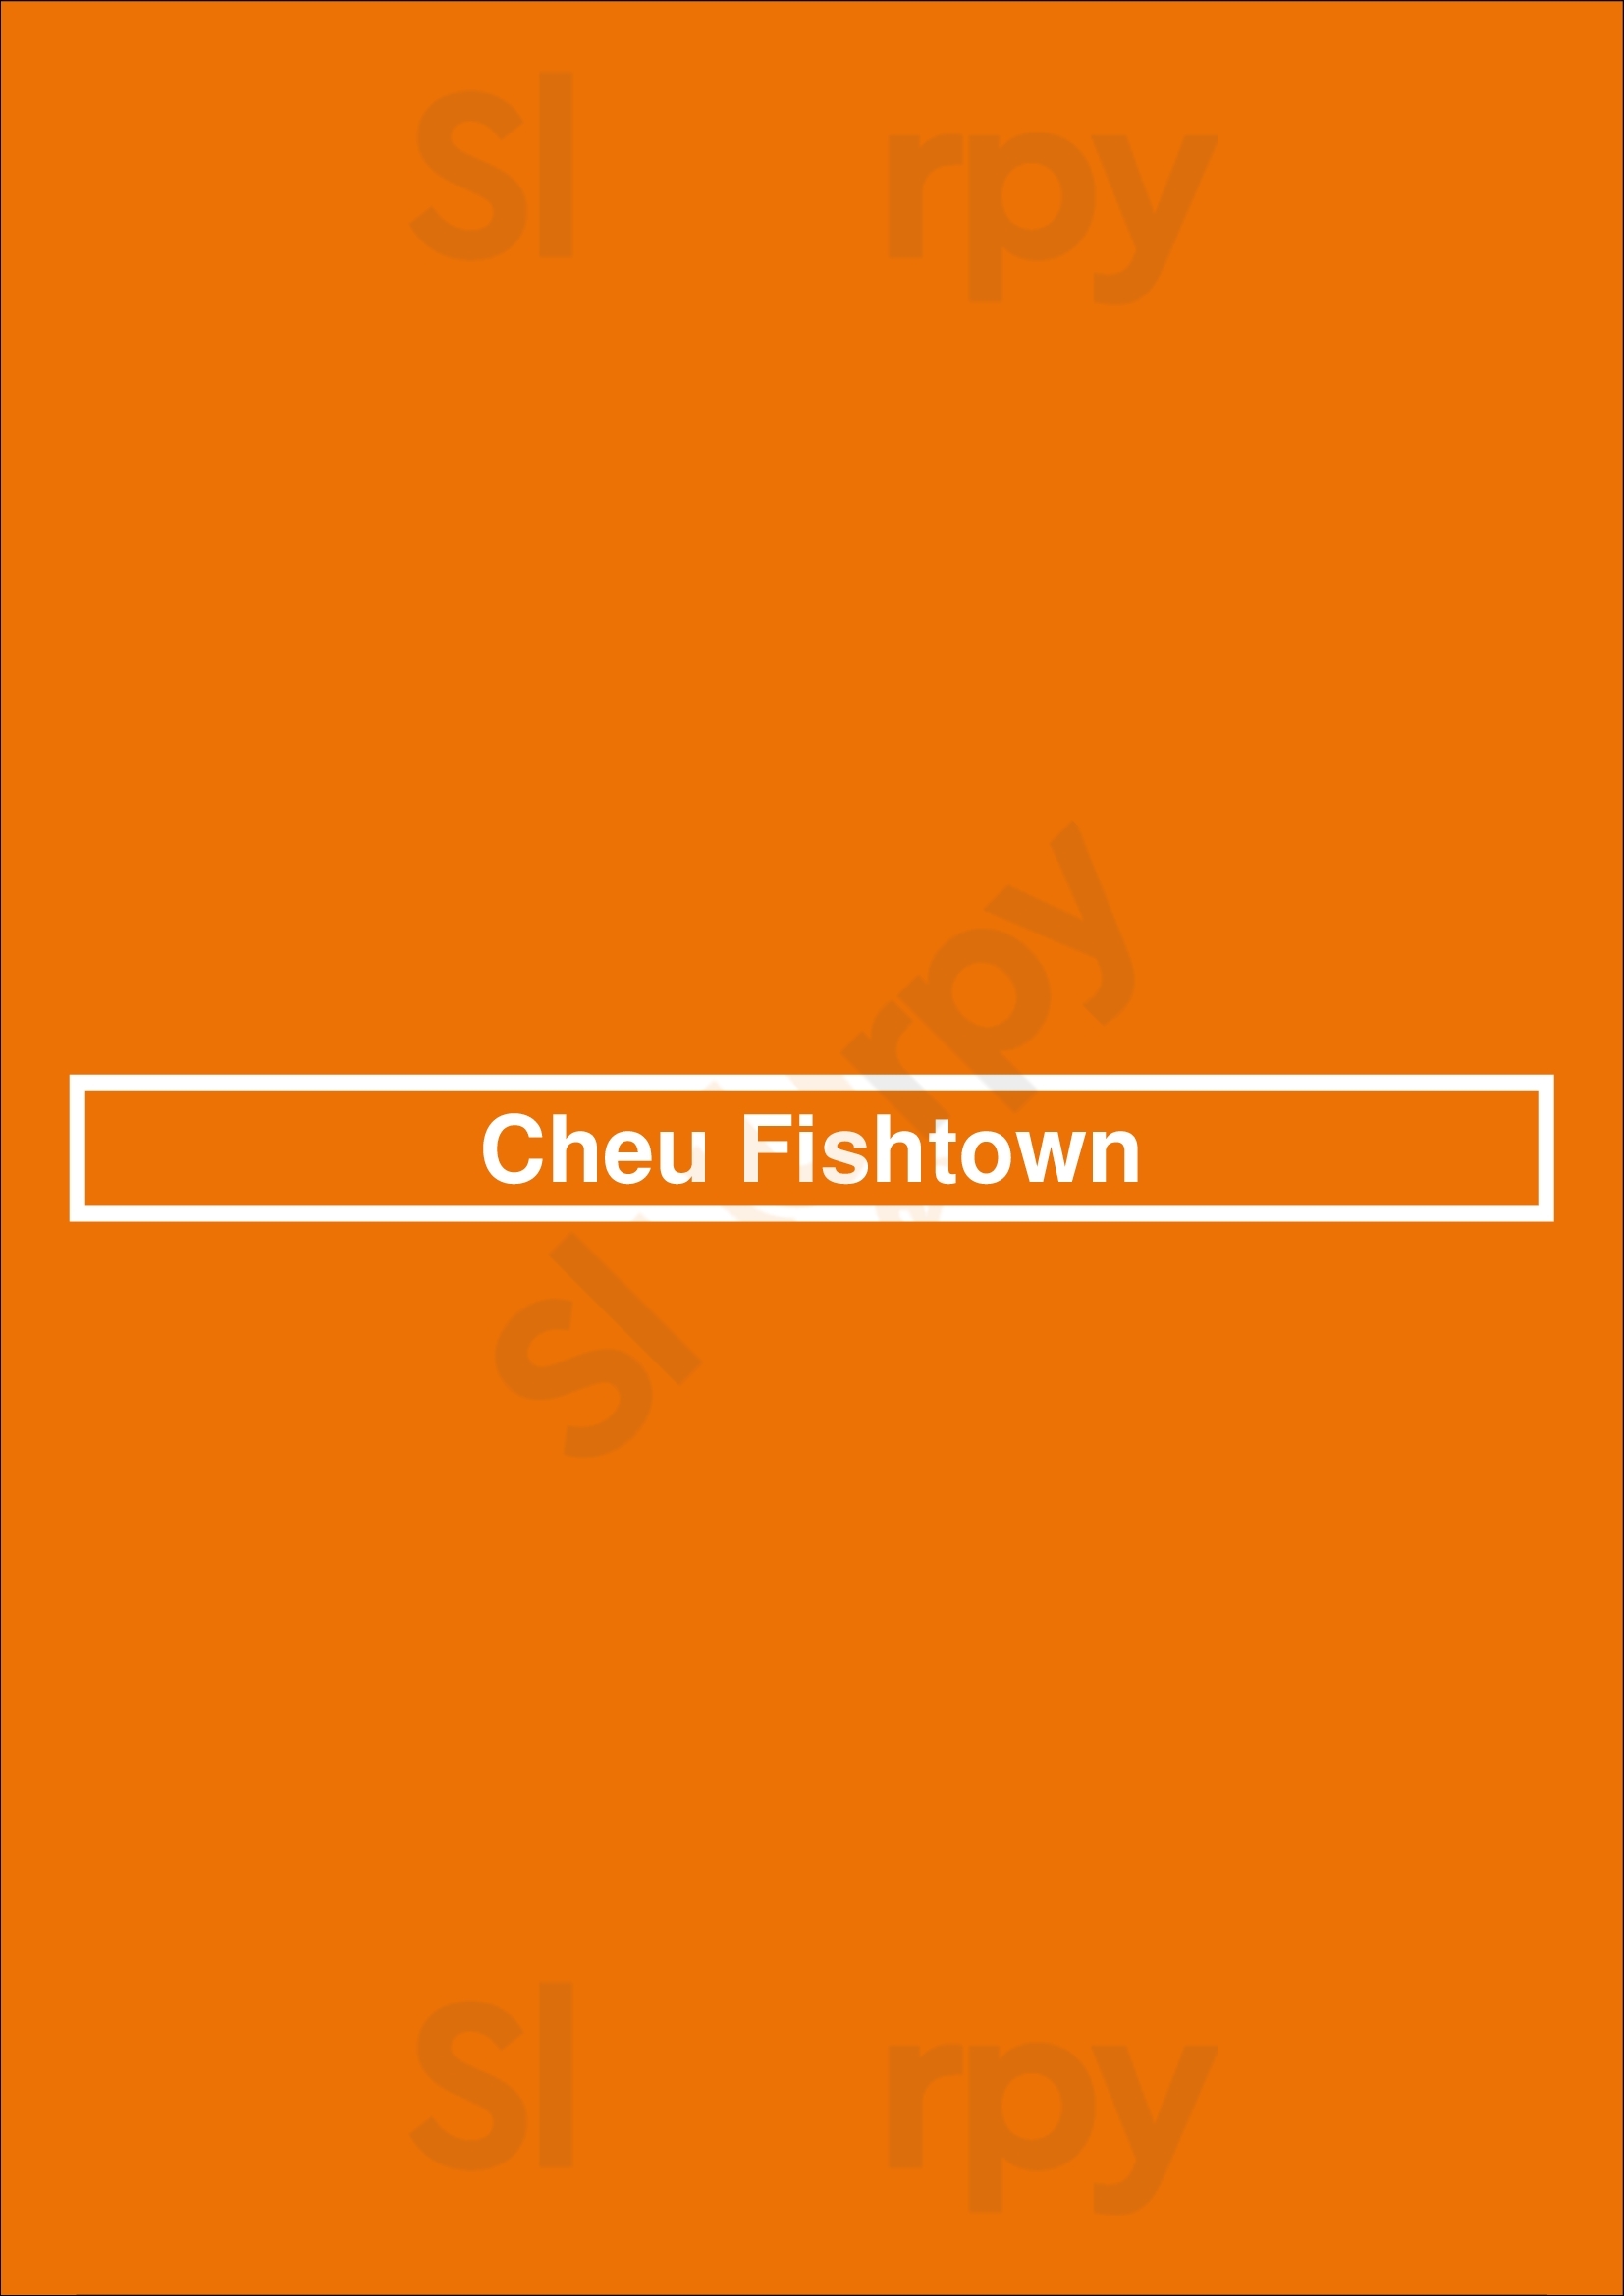 Cheu Fishtown Philadelphia Menu - 1